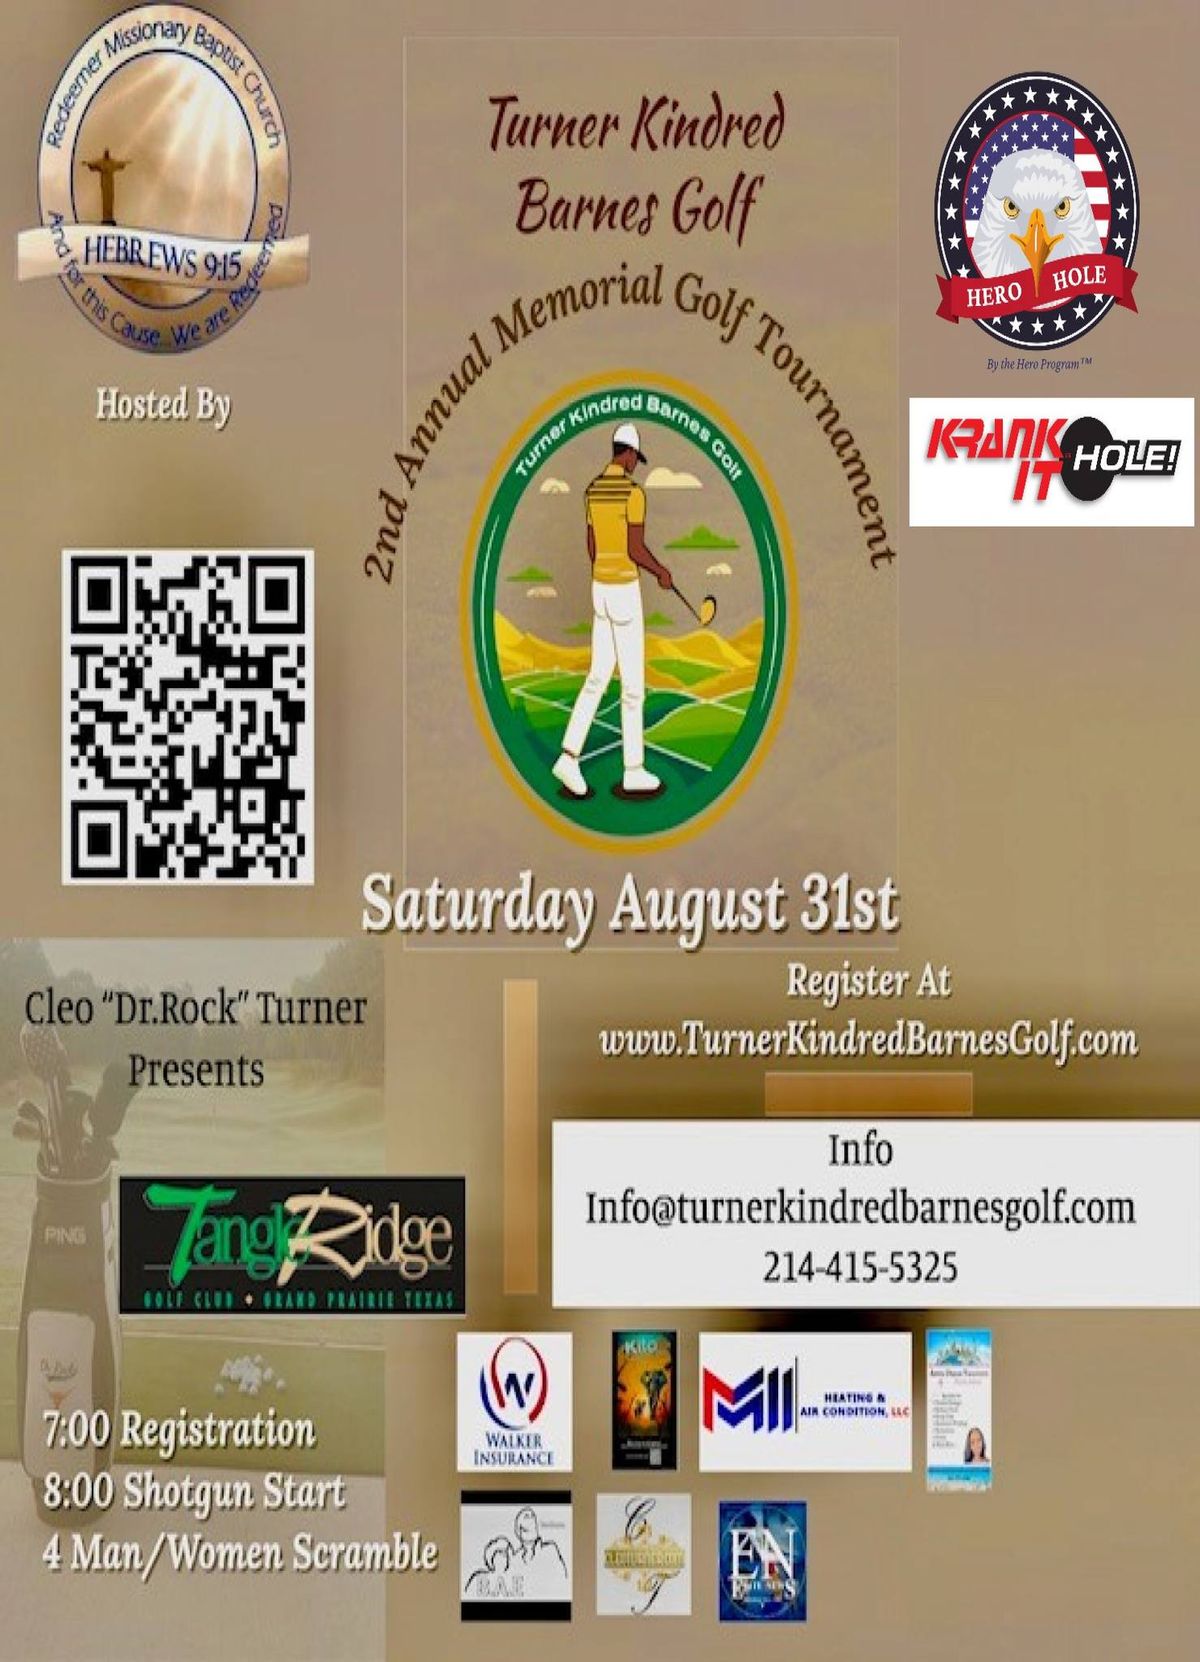 Turner Kindred Barnes Golf 2nd Annual Memorial Golf Tournament, TANGLE RIDGE GOLF CLUB